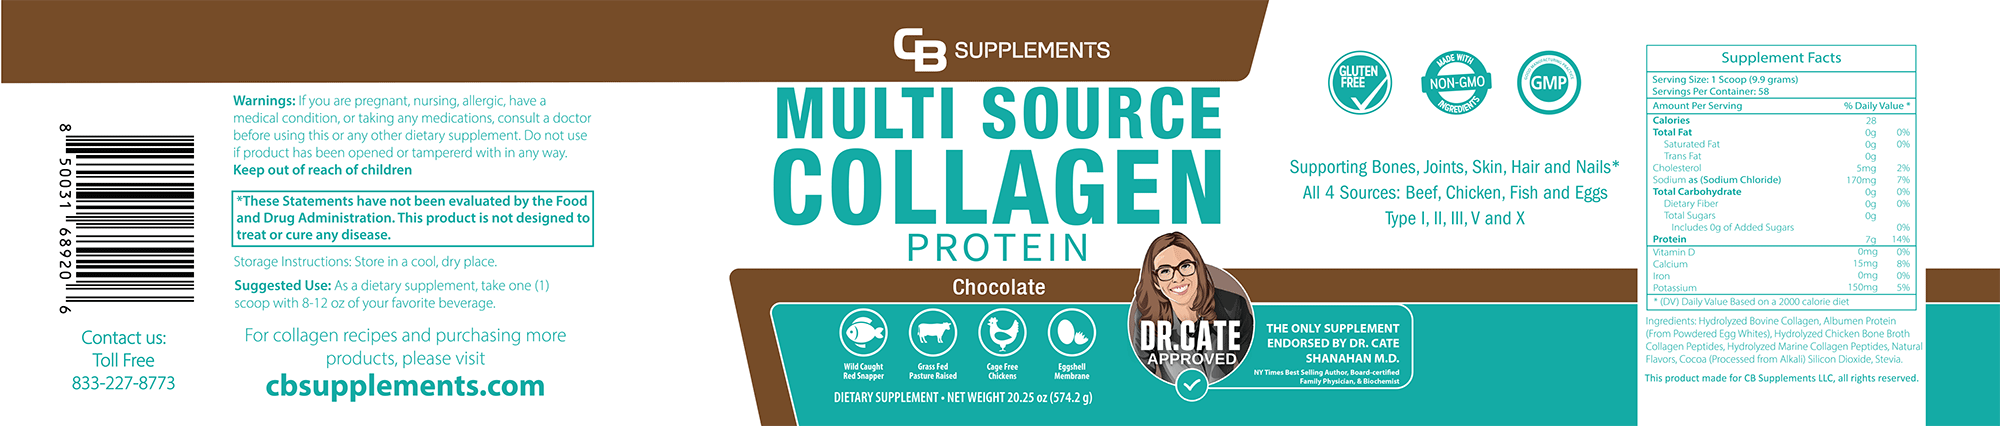 Chocolate Multi Collagen Protein Powder Label and Ingredients